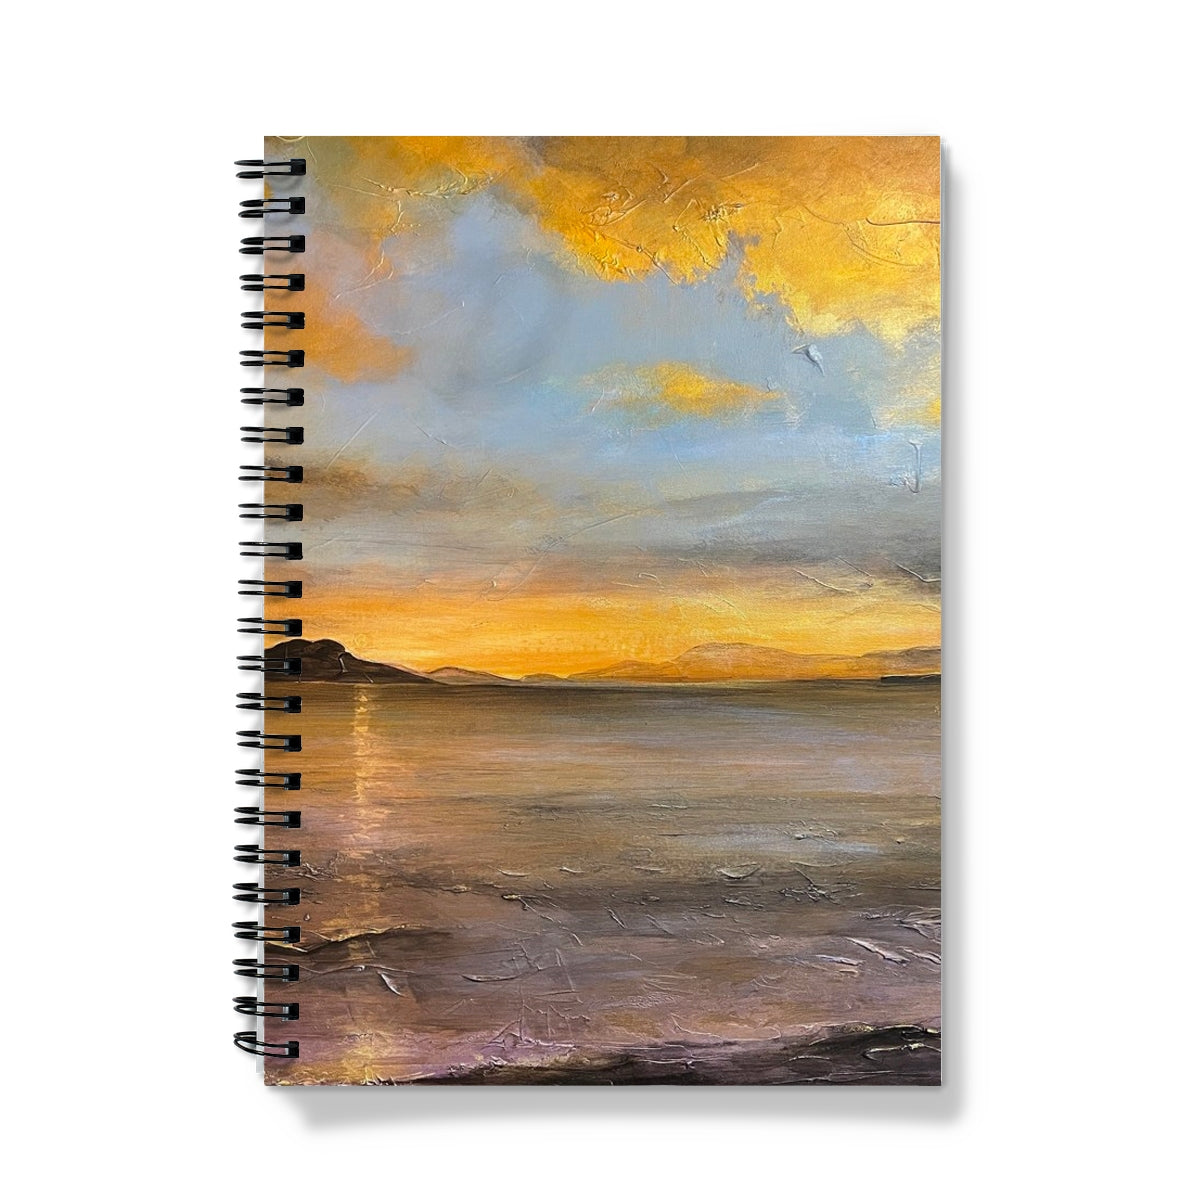 Loch Linnhe Sunset Art Gifts Notebook-Journals & Notebooks-Scottish Lochs & Mountains Art Gallery-A5-Graph-Paintings, Prints, Homeware, Art Gifts From Scotland By Scottish Artist Kevin Hunter